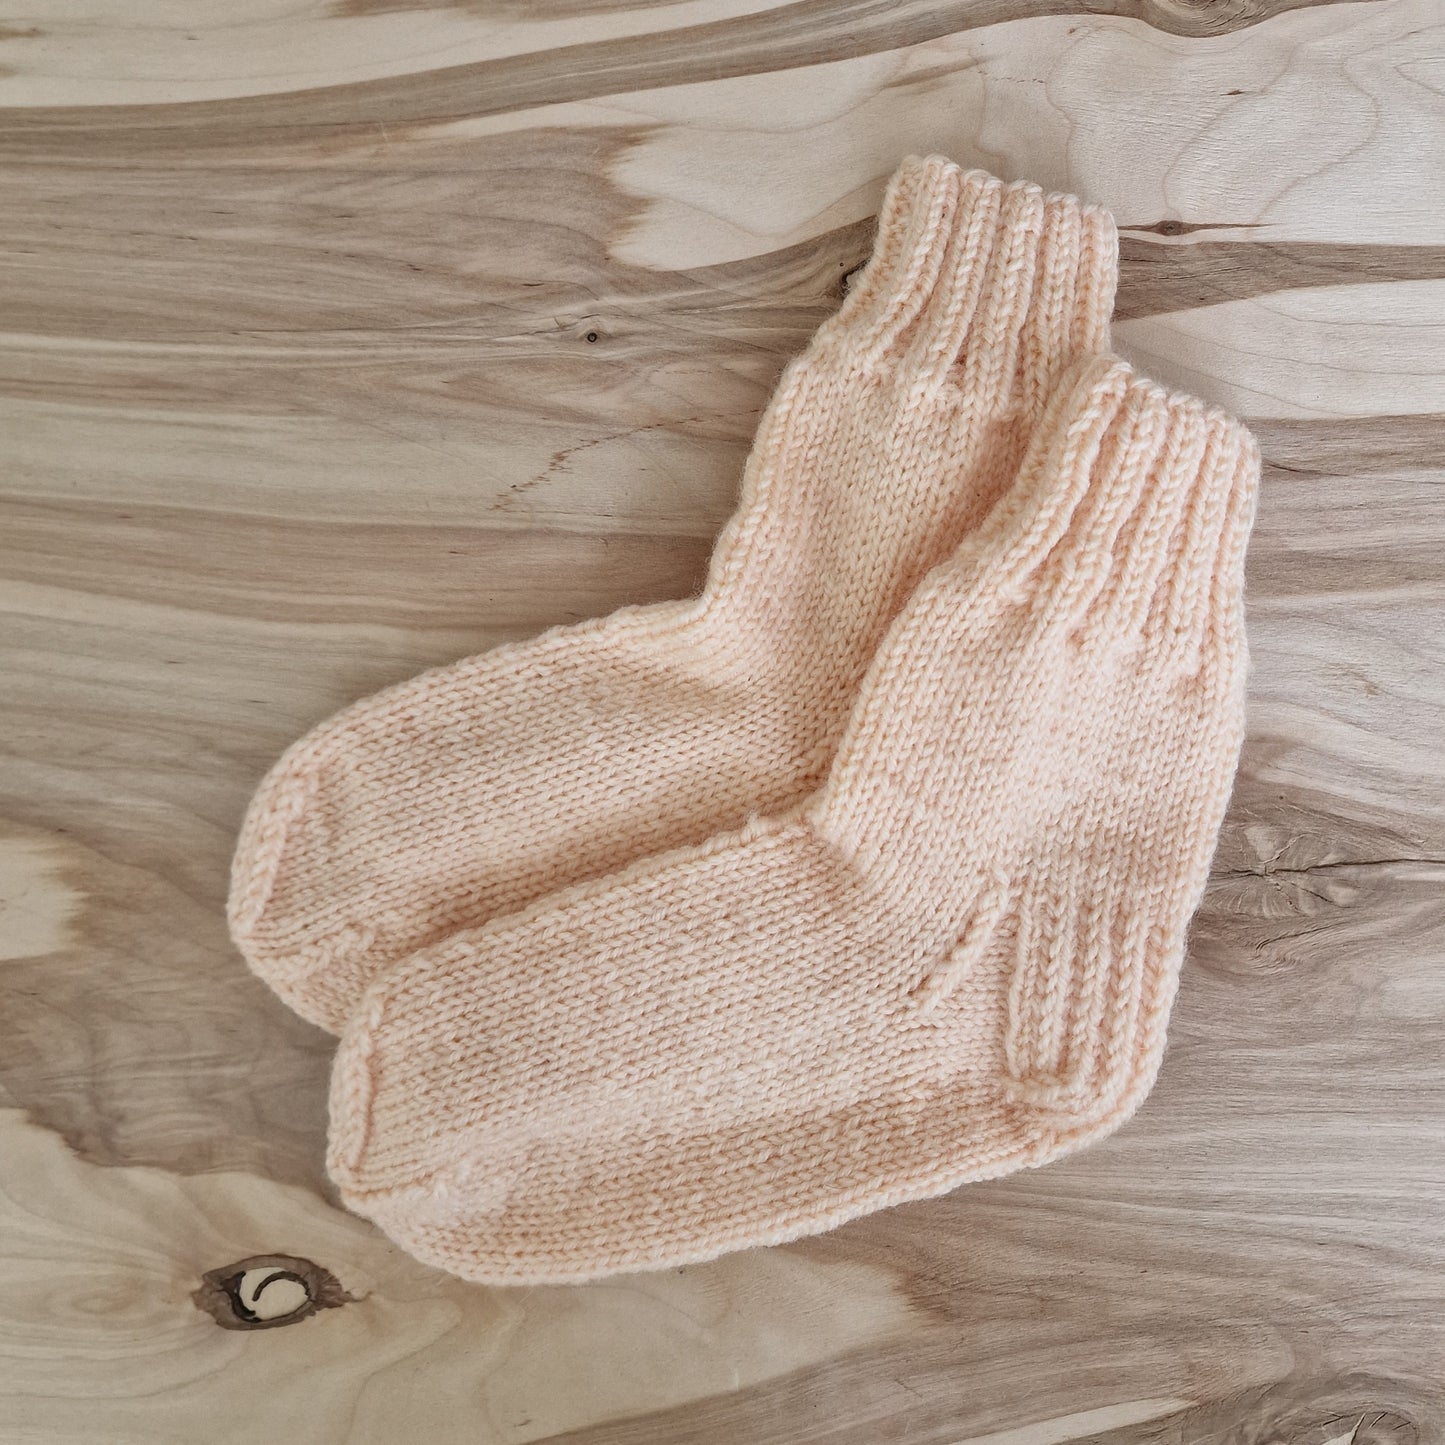 Flesh-colored children's woolen socks 31-33. size (ANMI 20)